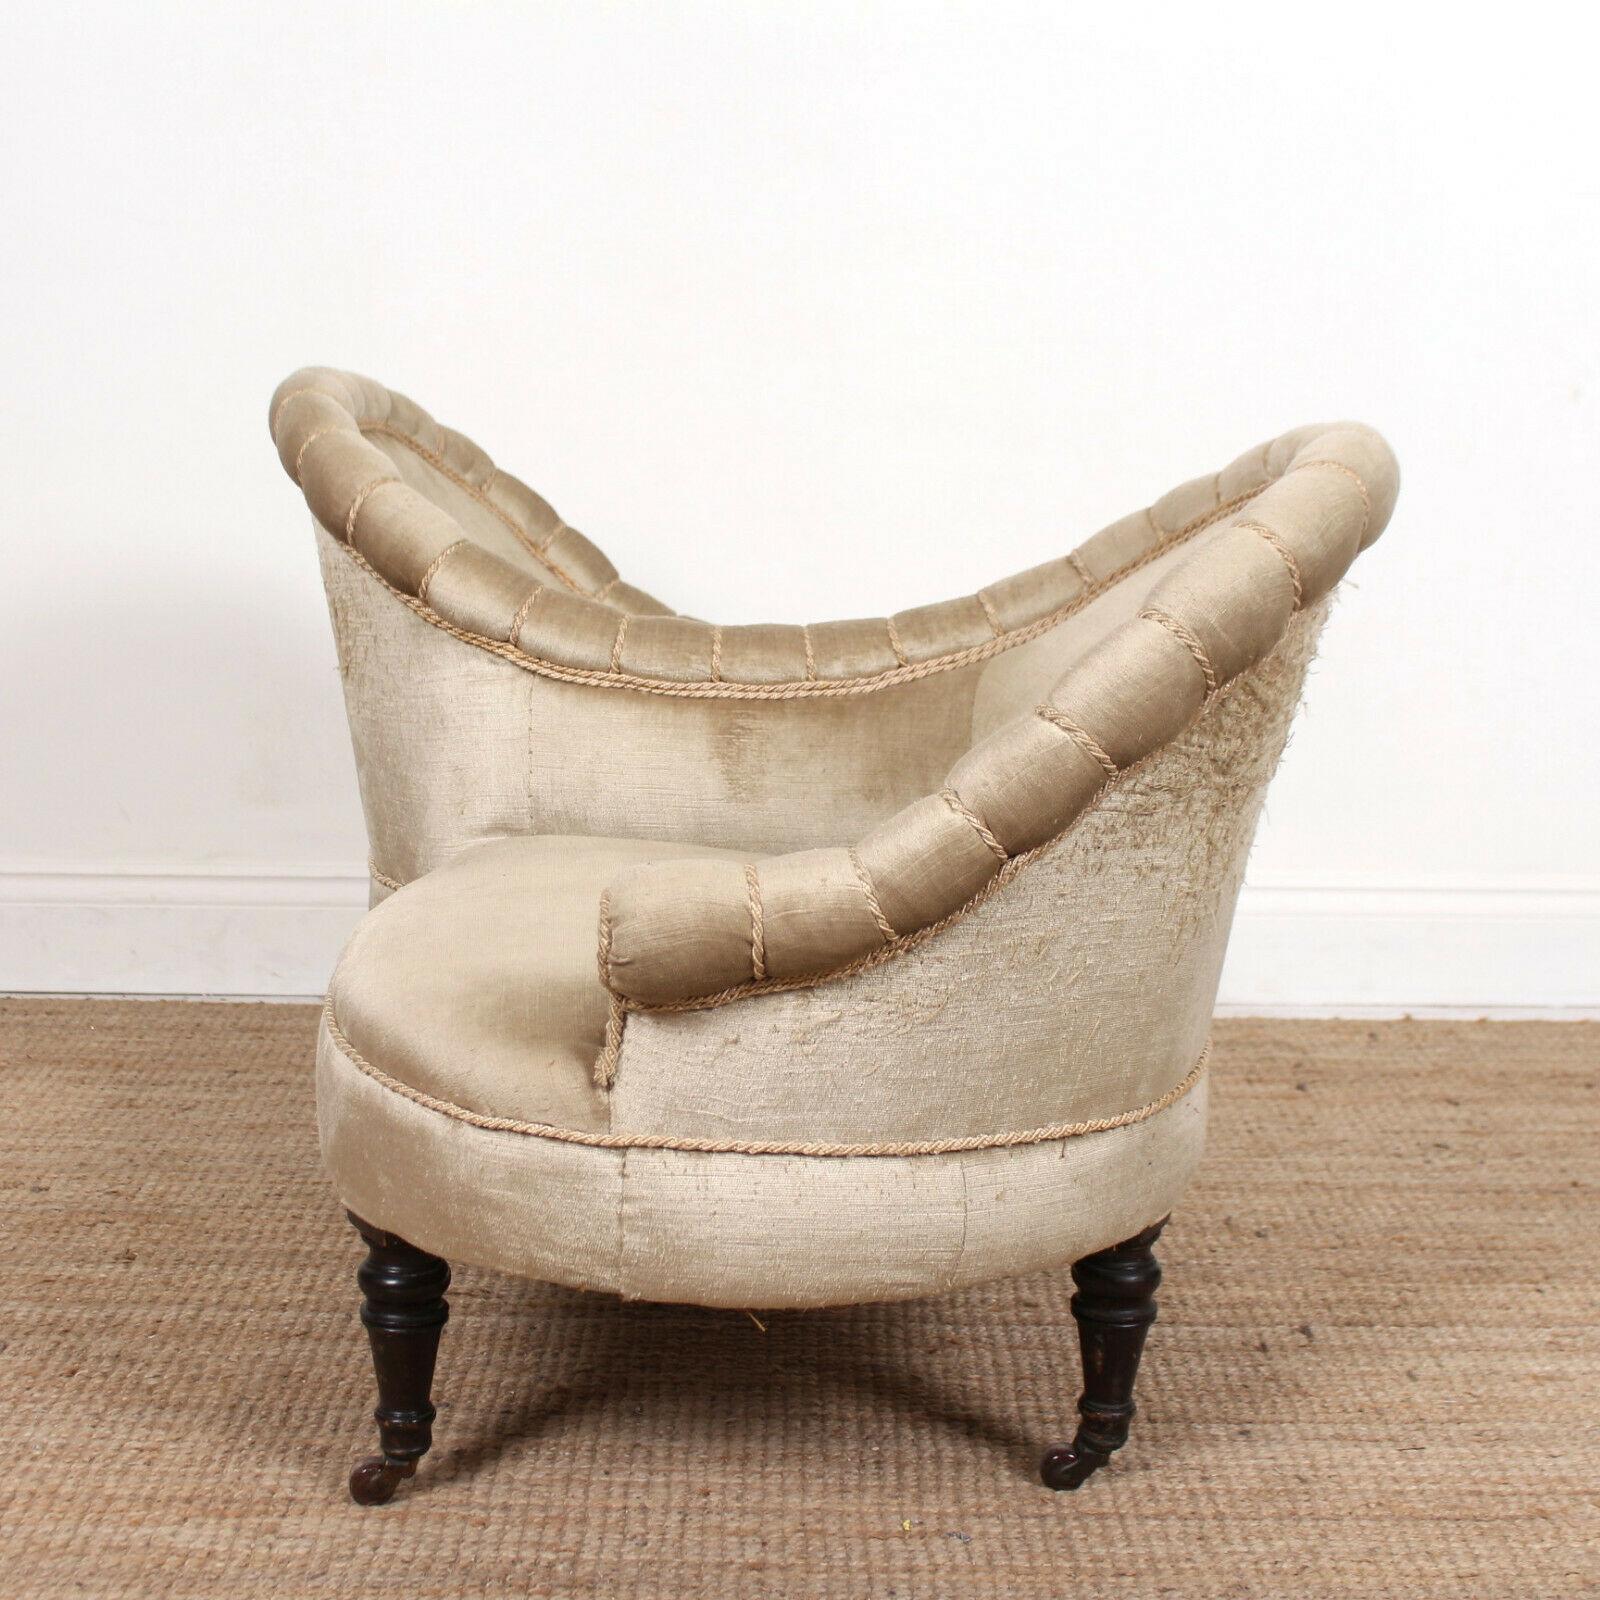 19th Century Antique Conversation Sofa Carved Window Seat 2-Seat Petite Victorian Settee